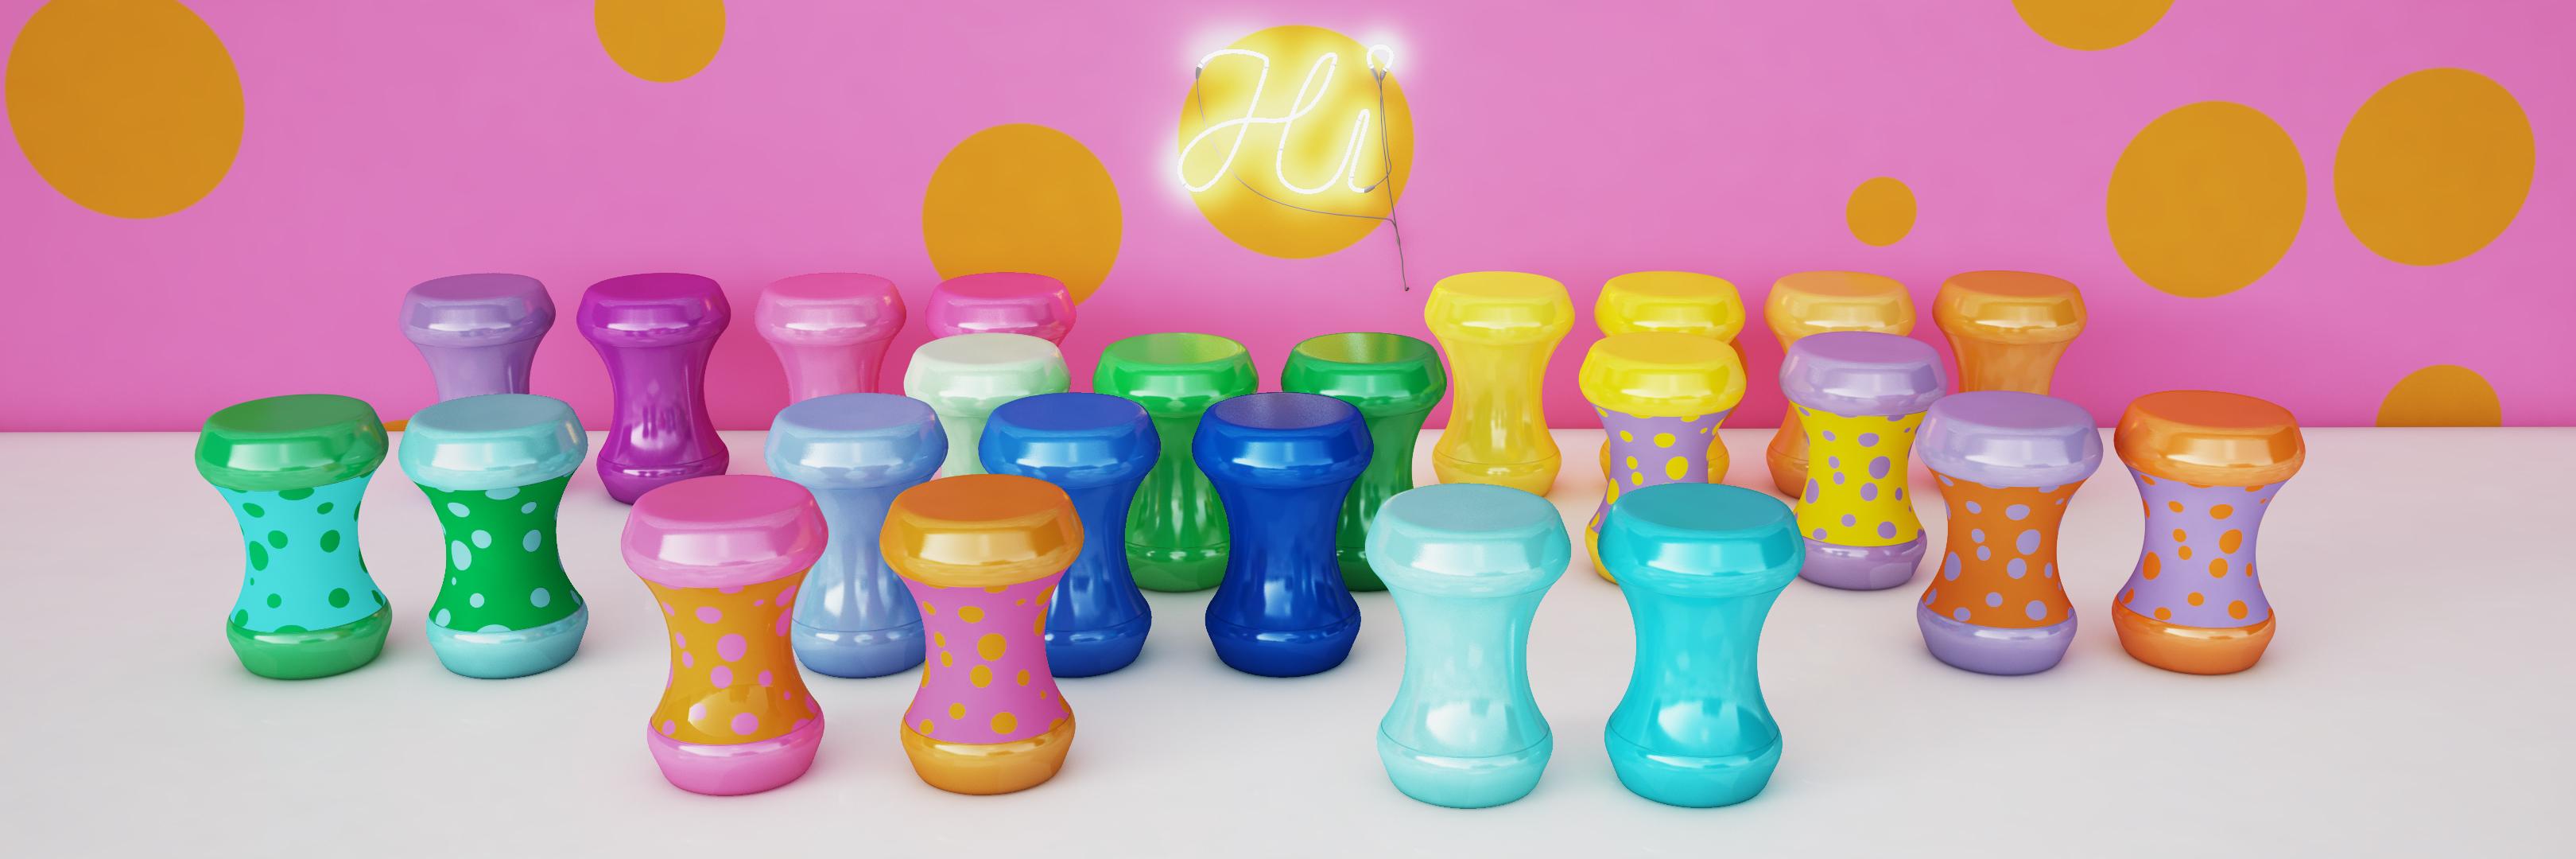 Boom Bom Table: Multicolor Pop Art-Inspired Side Table